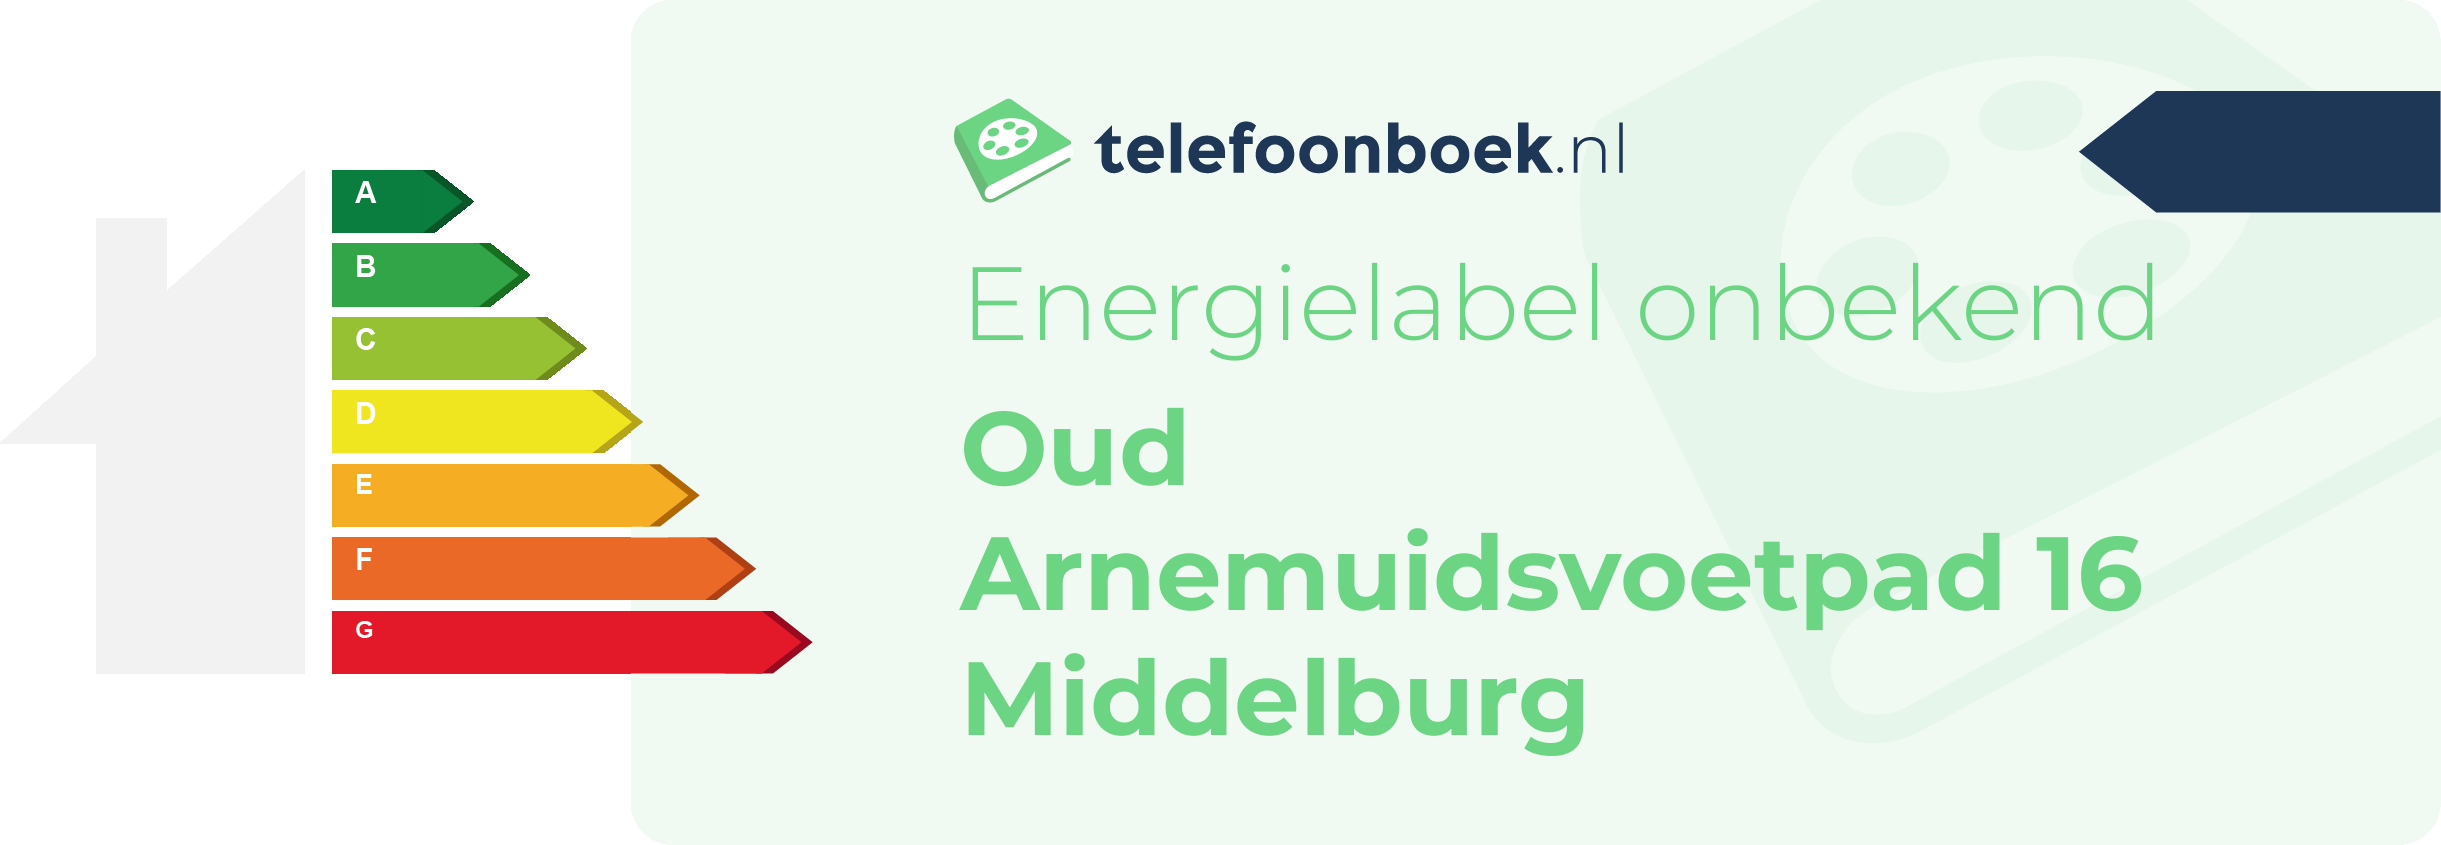 Energielabel Oud Arnemuidsvoetpad 16 Middelburg